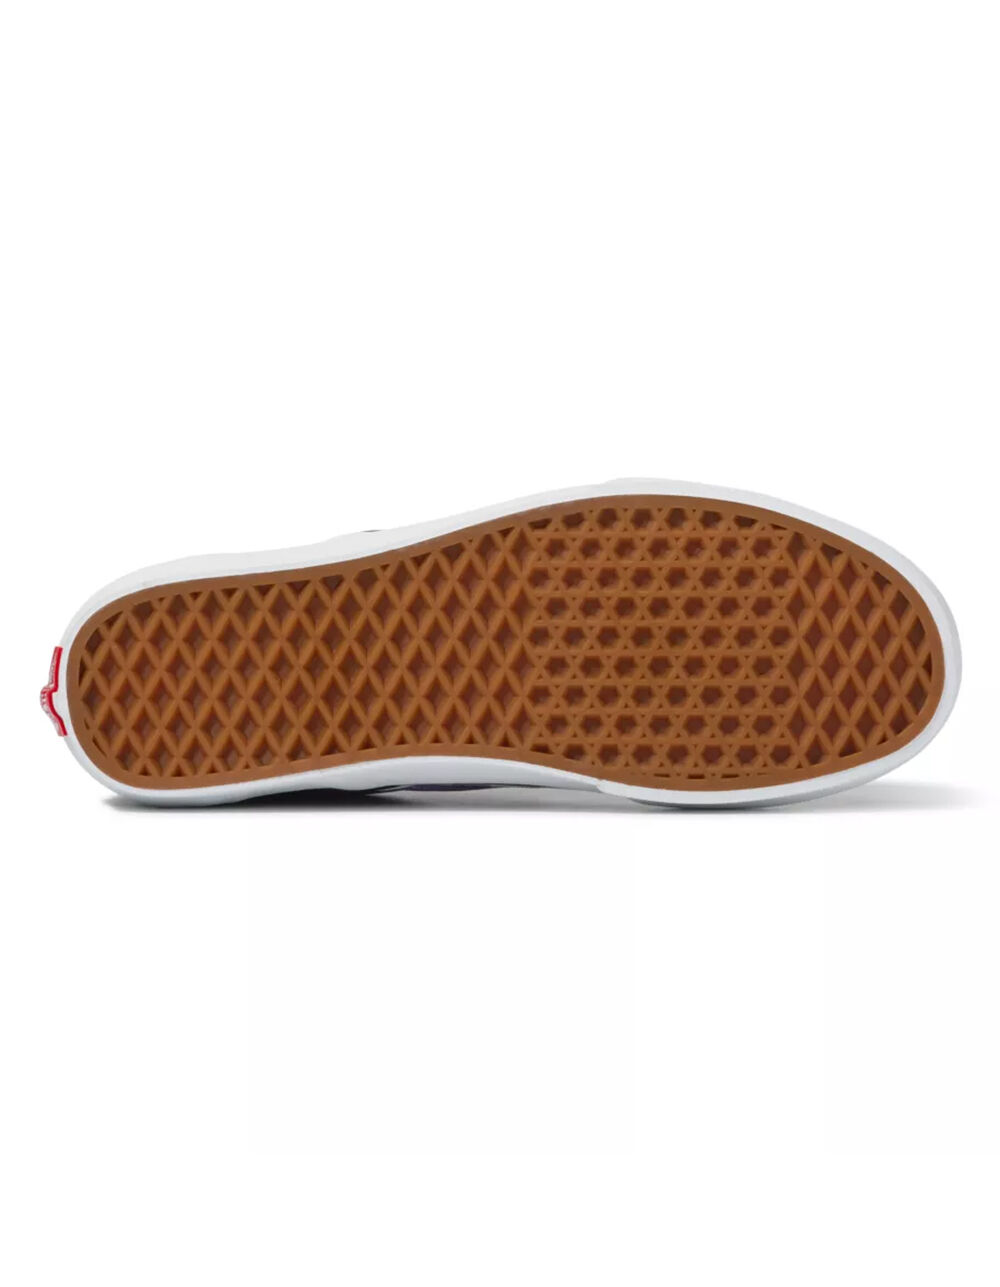 VANS Checkerboard Classic Slip On Shoes - CHALK VIOLET/TRUE WHITE | Tillys